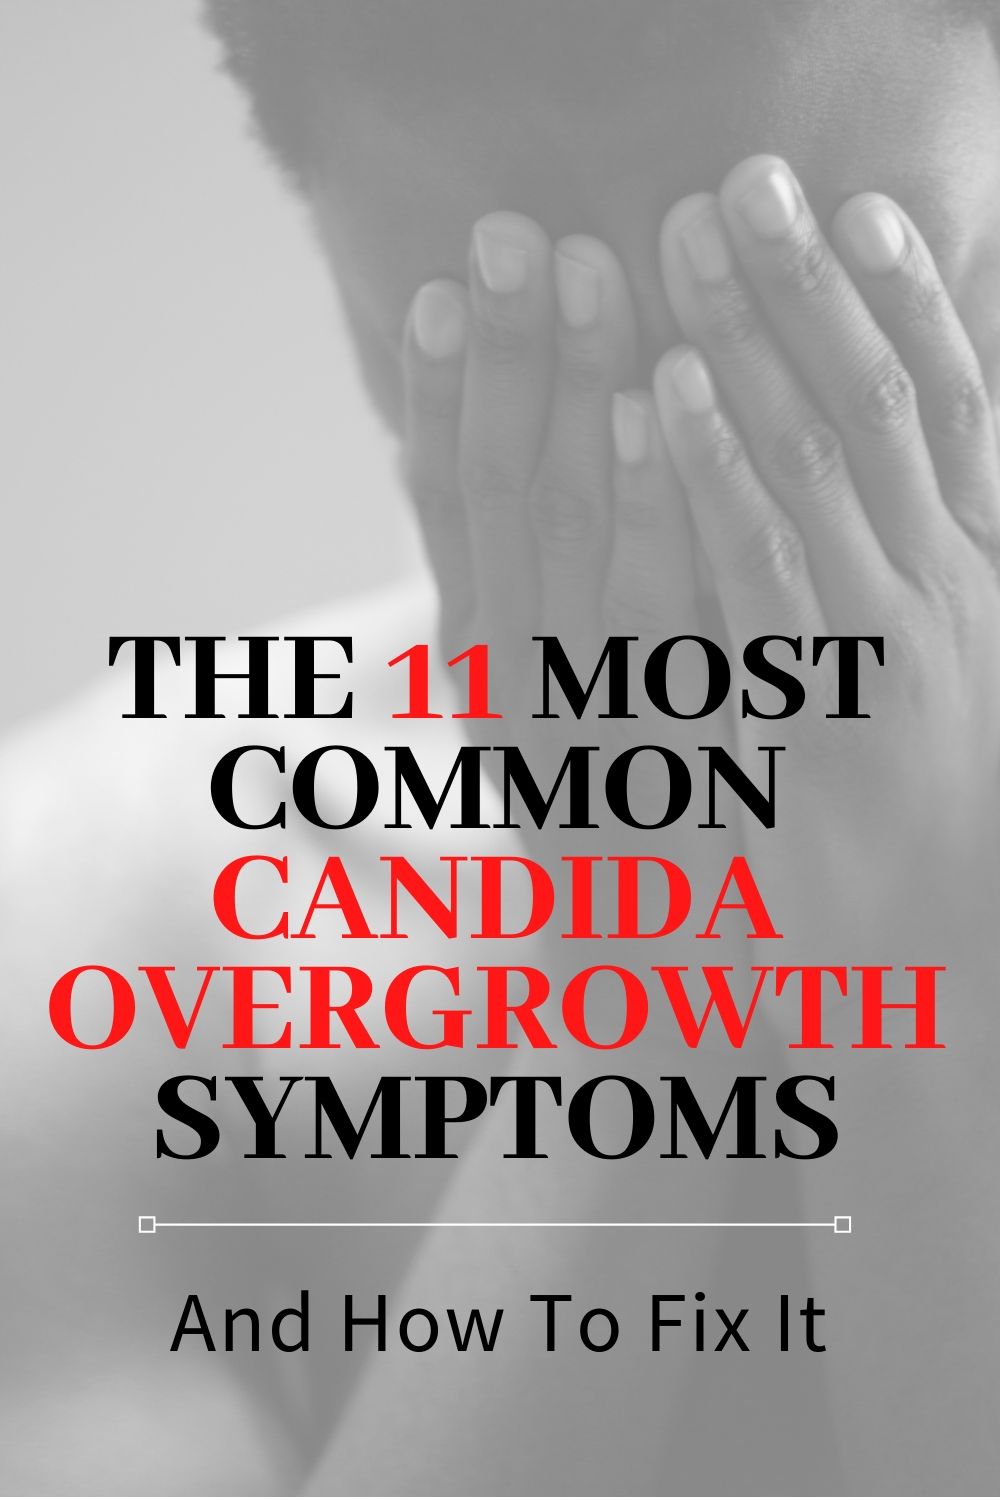 Candida yeast overgrowth symptoms